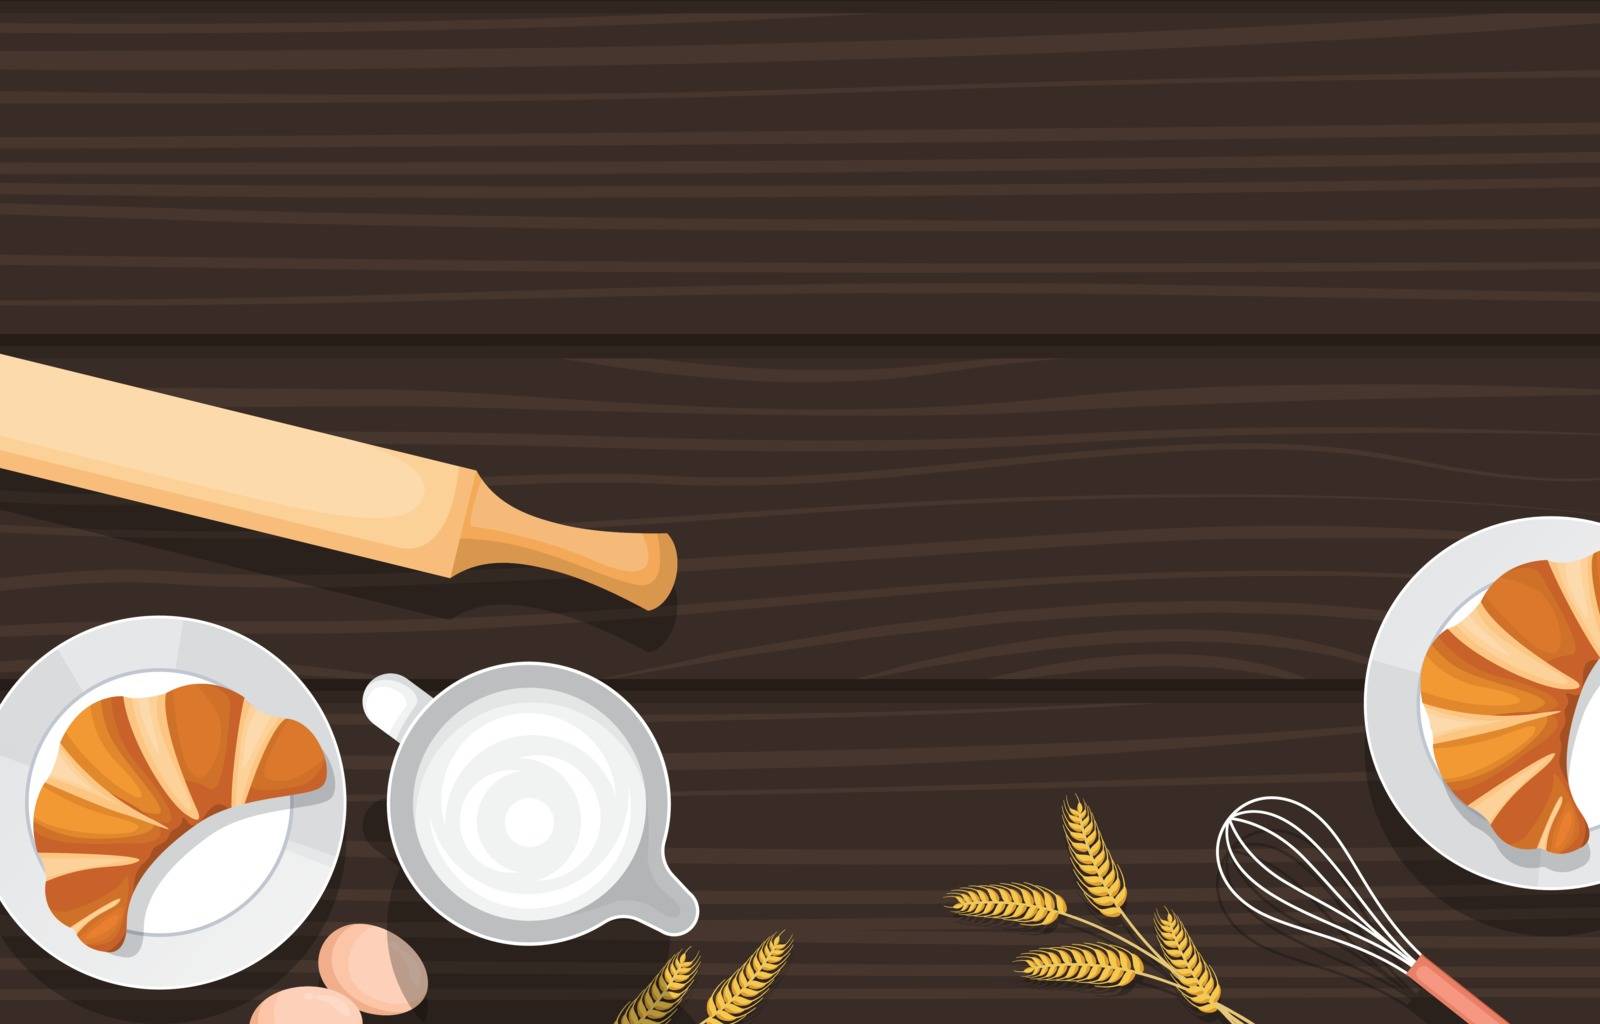 Bread Food Utensil on Cooking Wooden Table Kitchen Backdrop Illustration by jongcreative